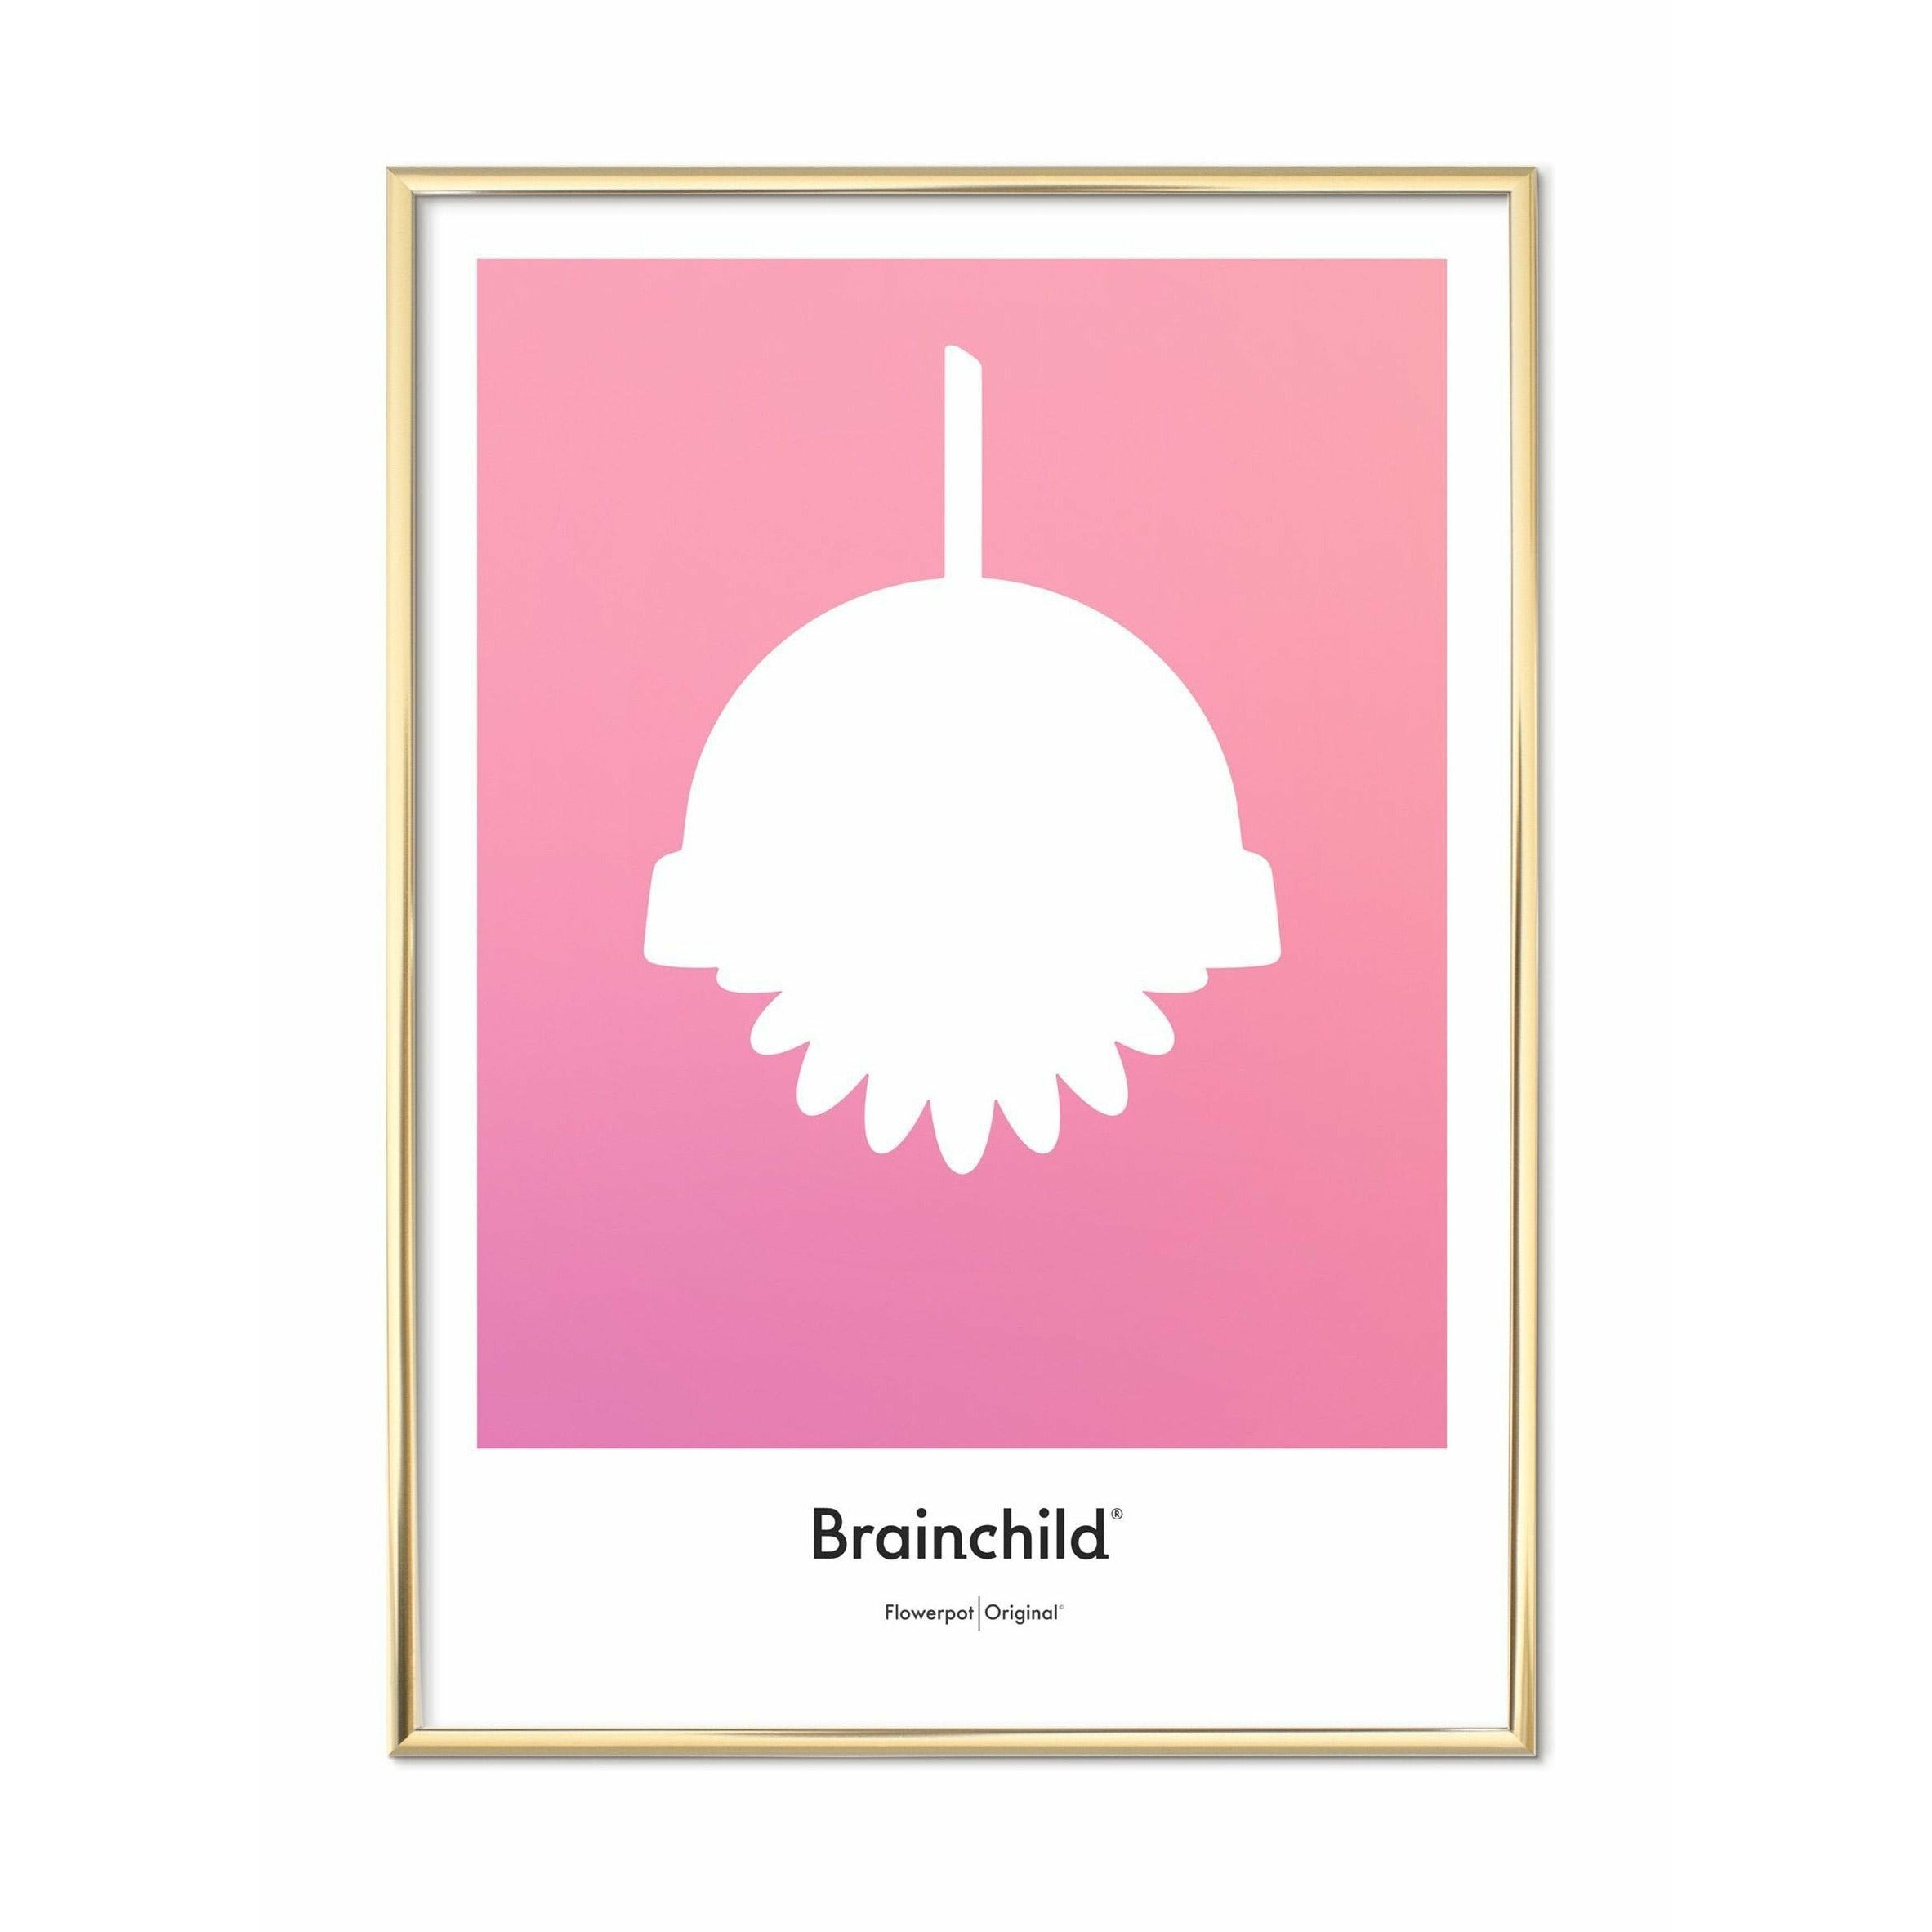 Brainchild Bloempotontwerppictogram Poster, messing gekleurd frame 30 x40 cm, roze